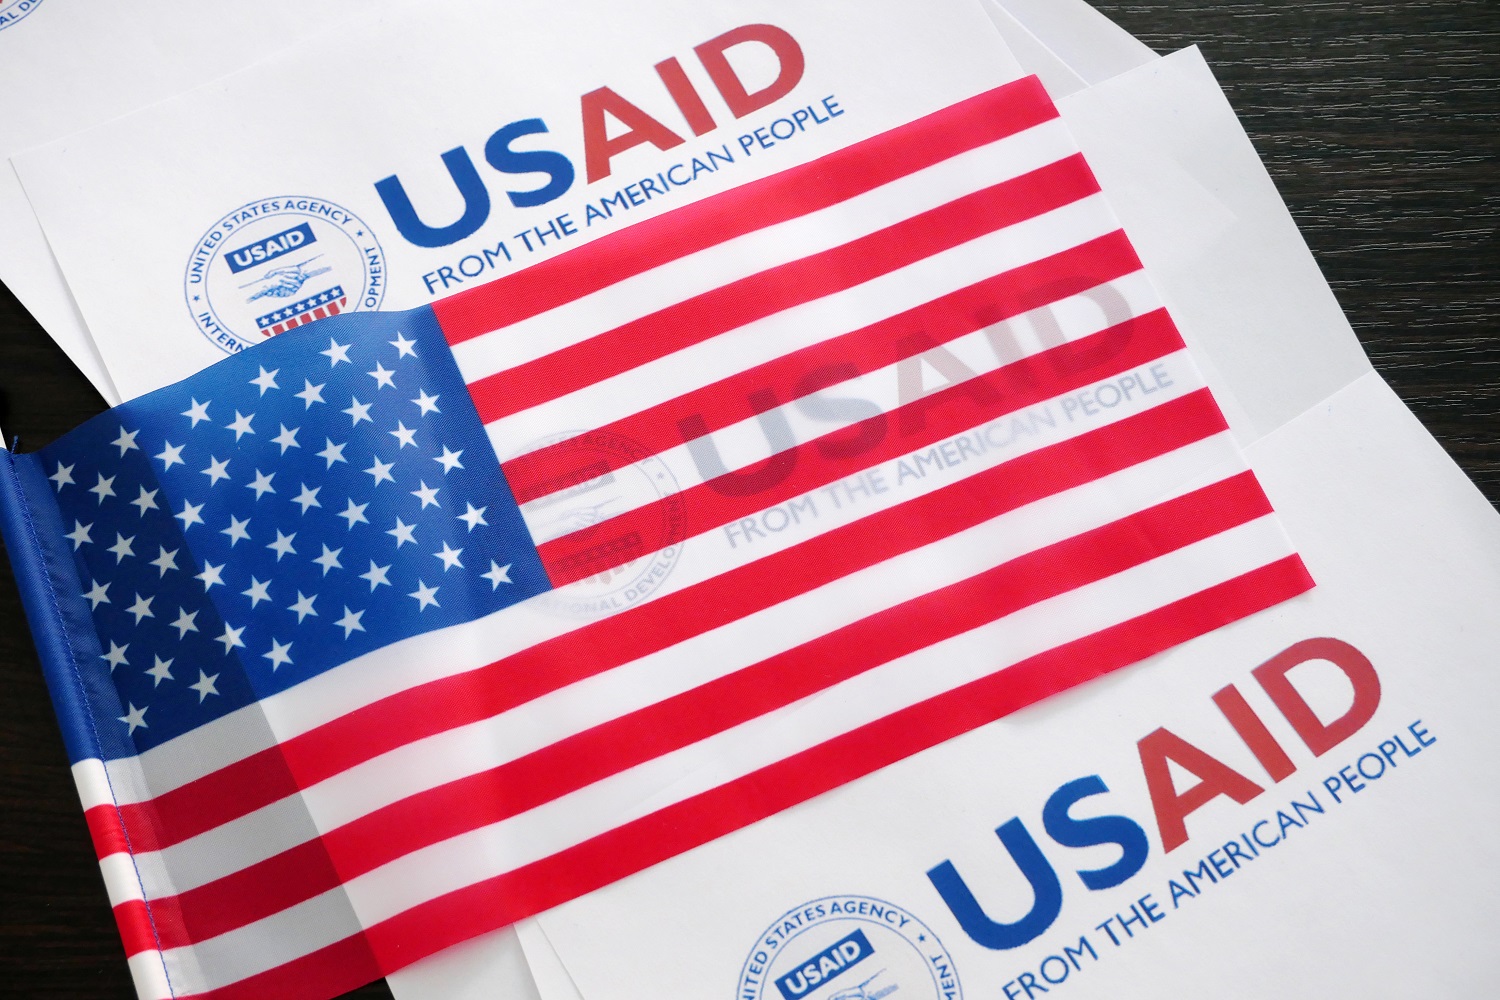 Image of USAID banner